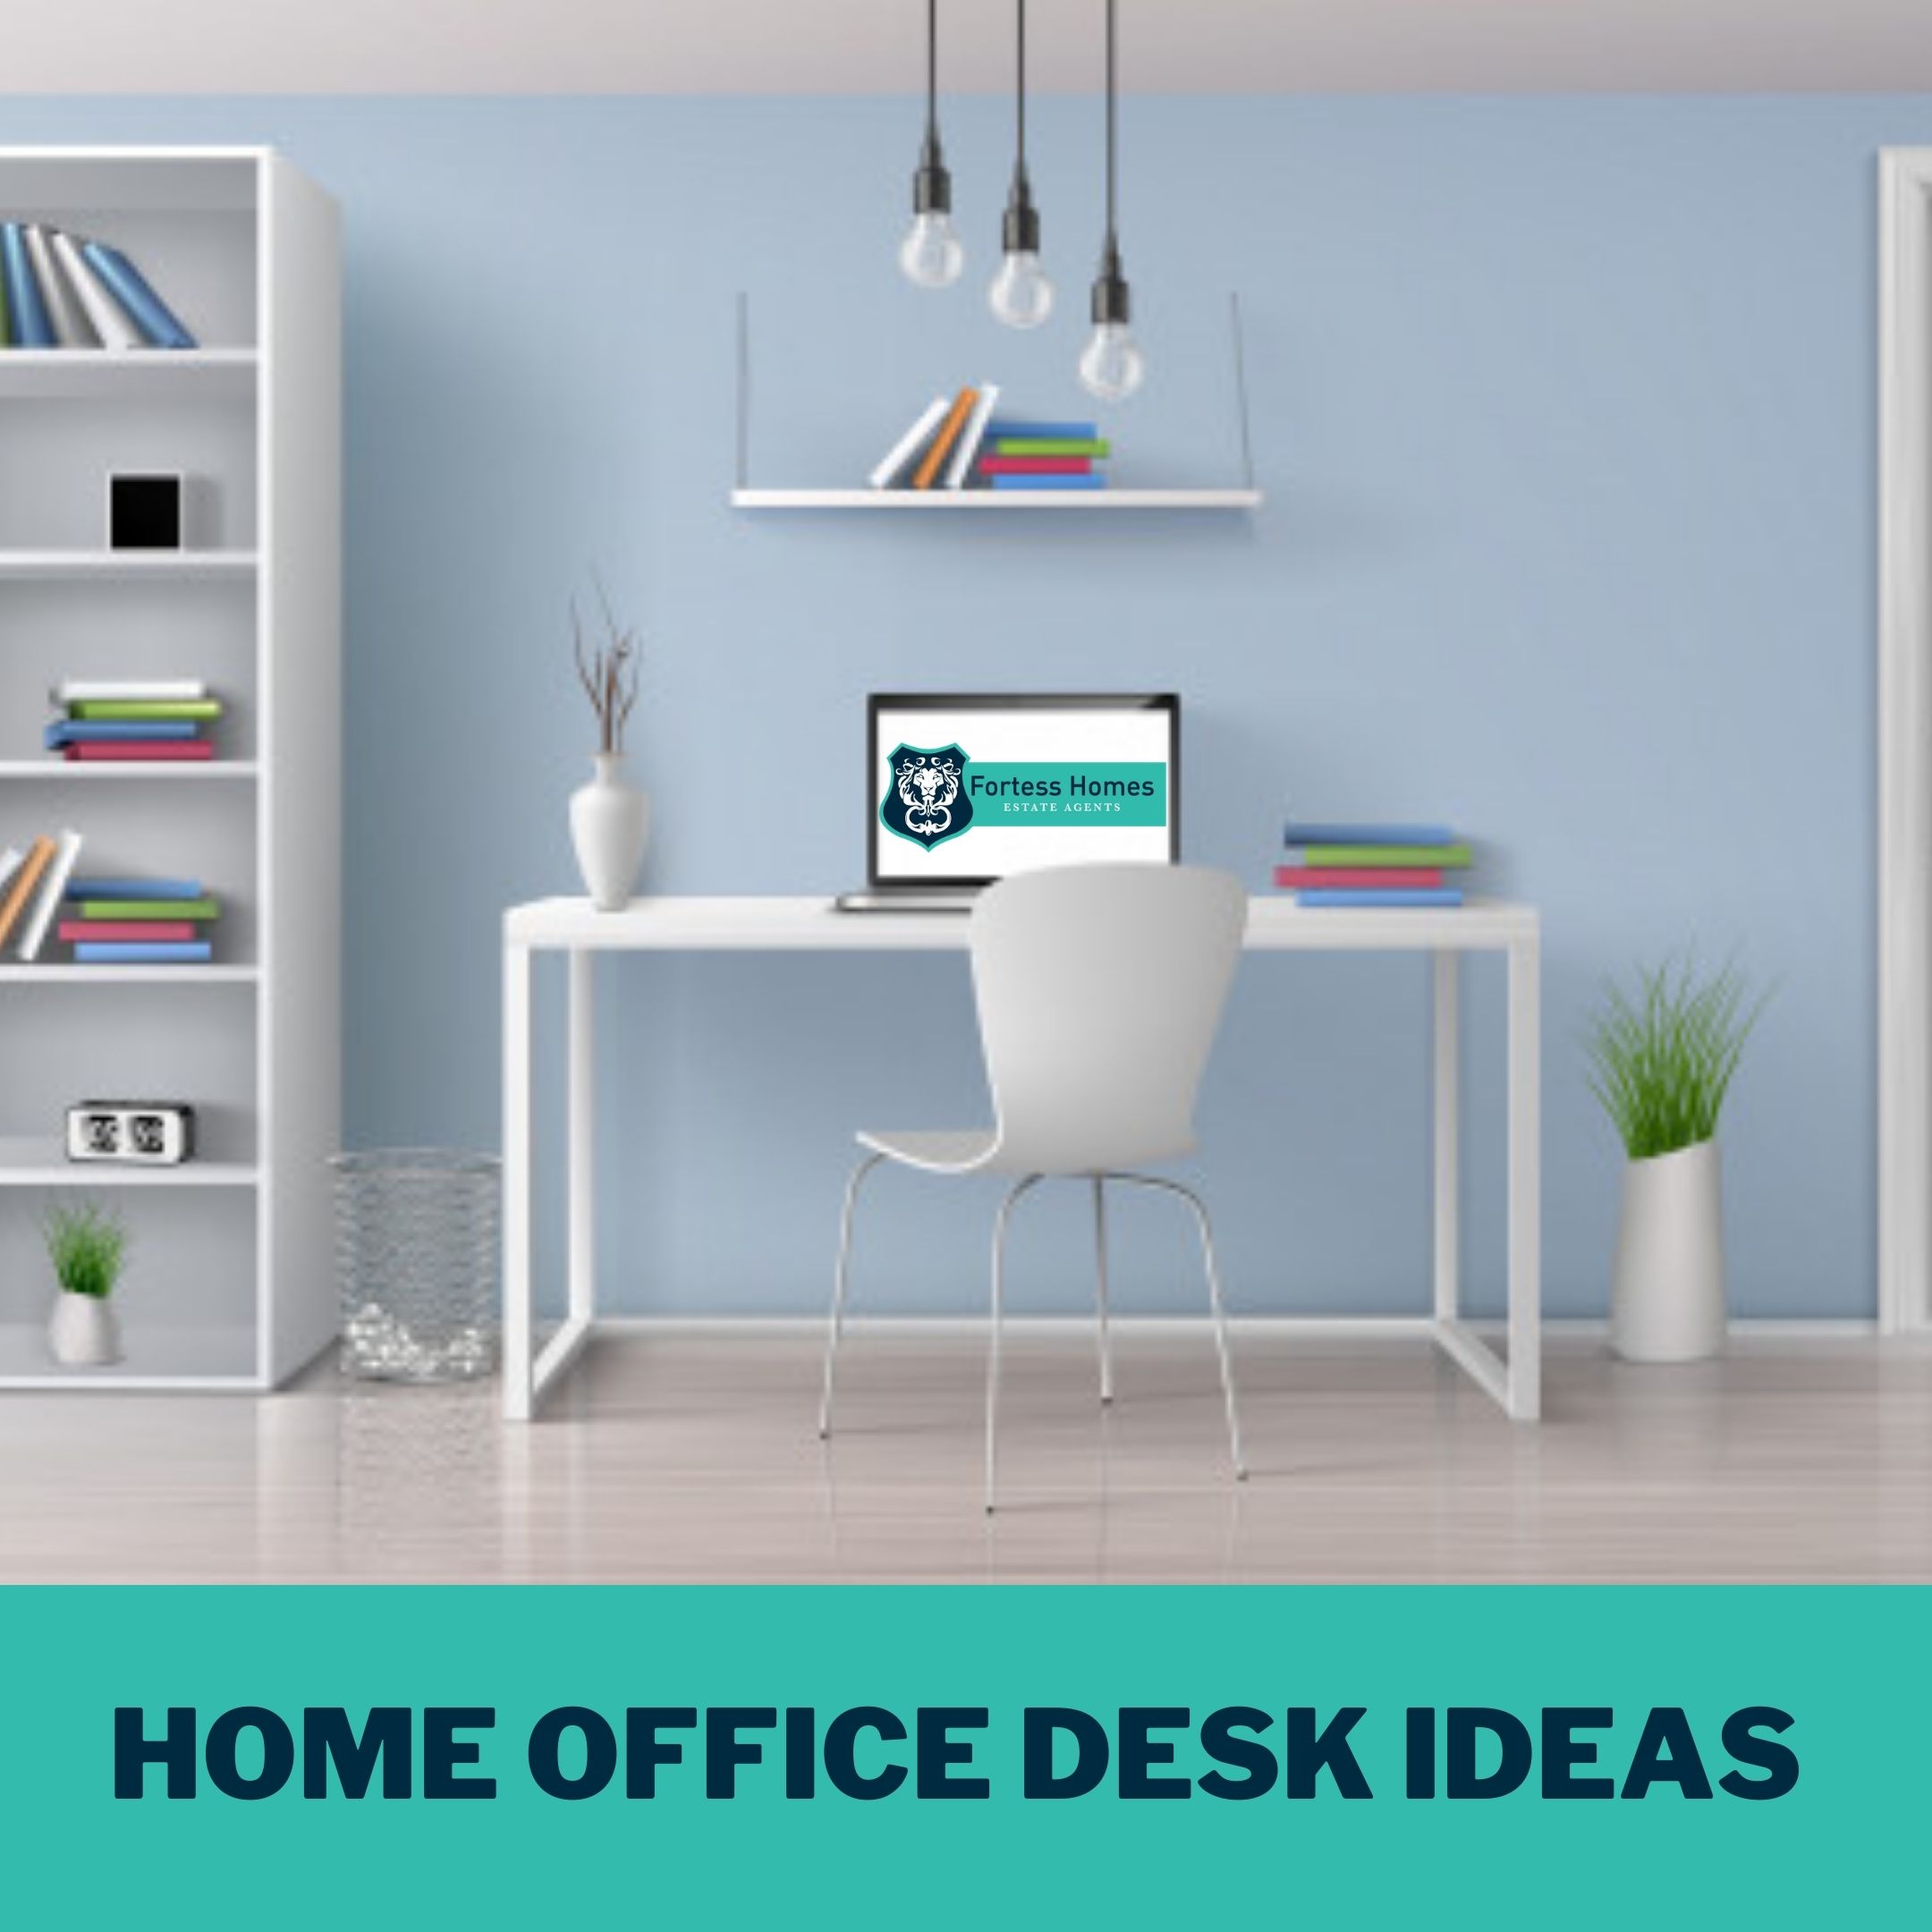 HOME OFFICE DESK IDEAS